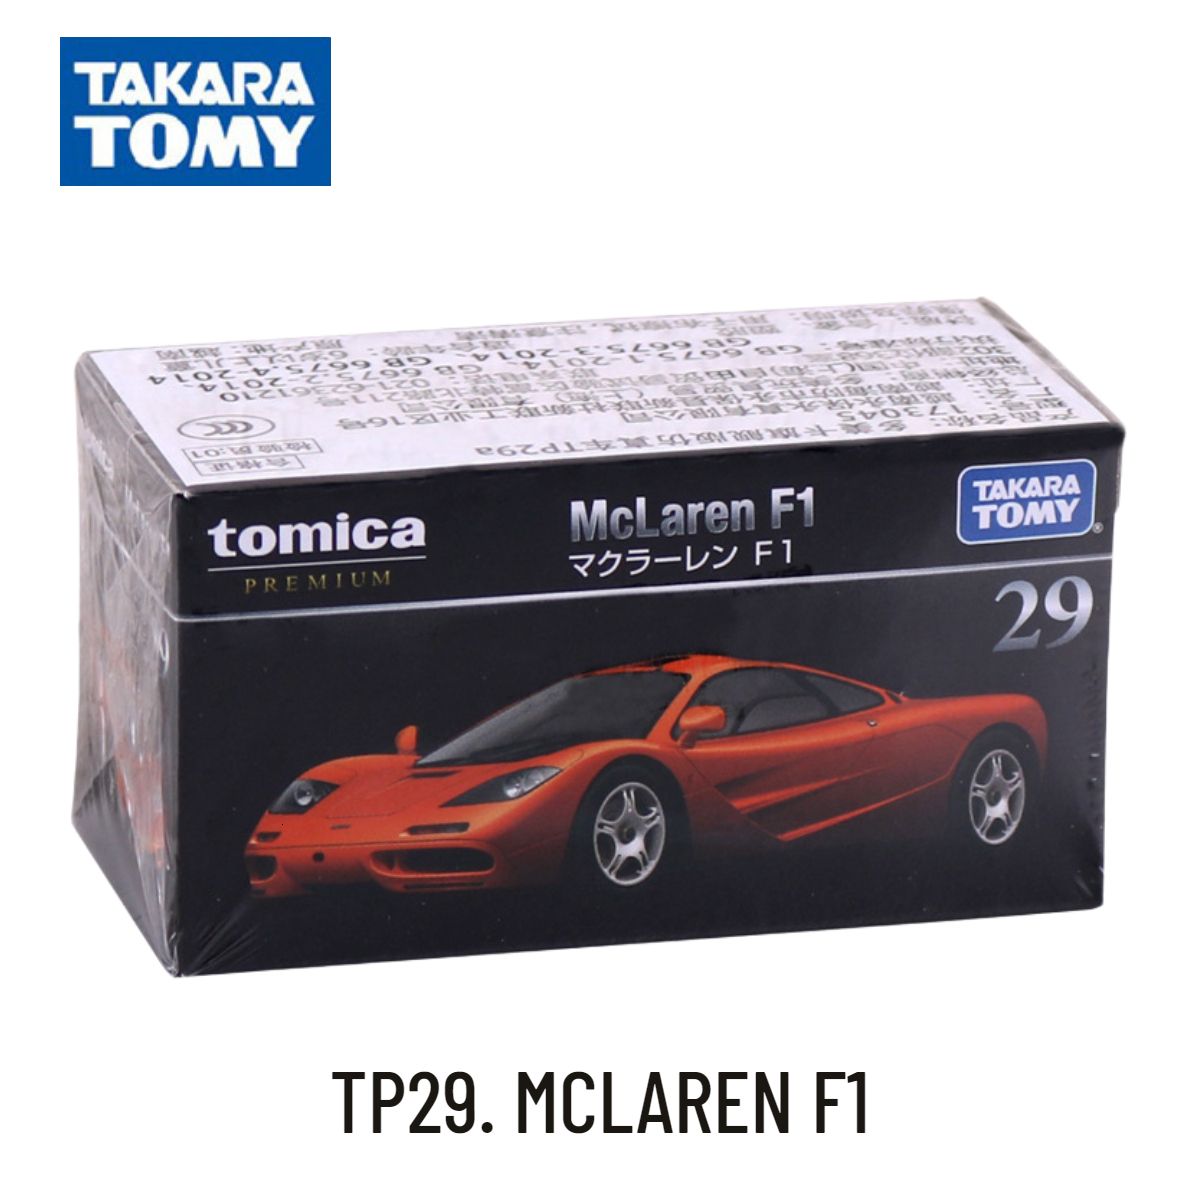 TP29. McLaren F1